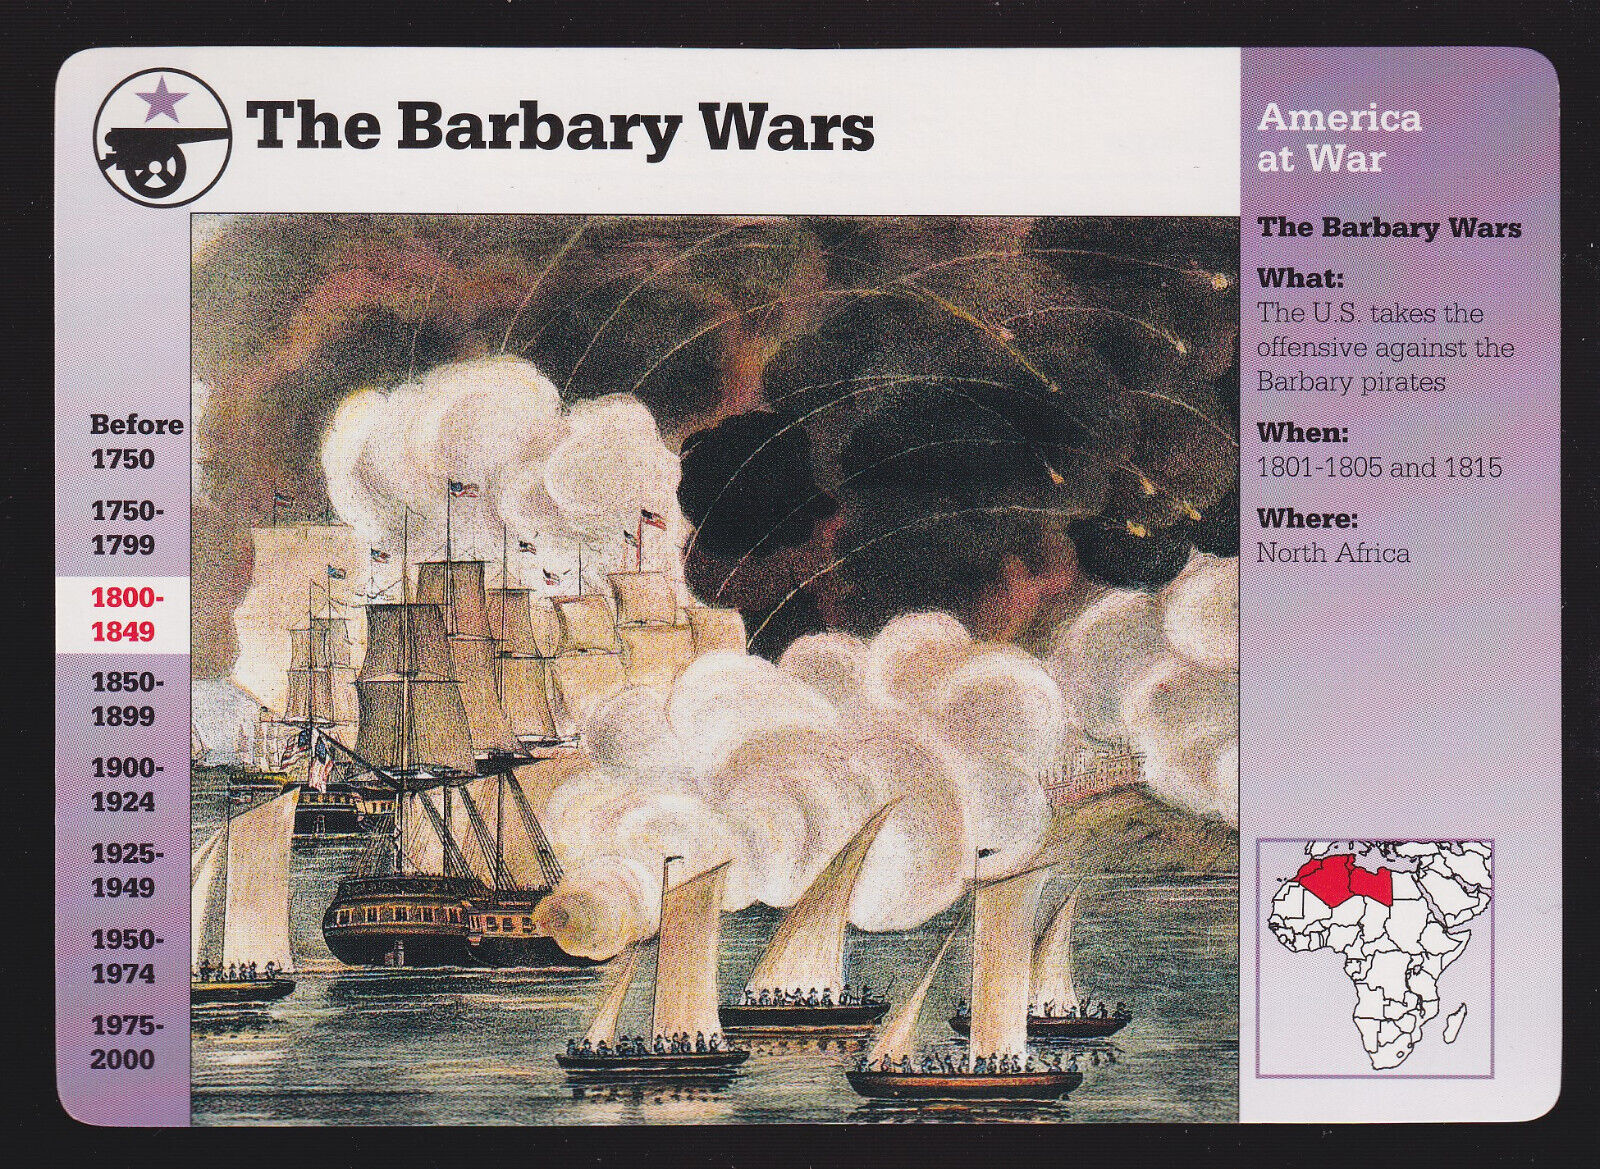 THE BARBARY WARS 1801-1805 Tripoli 1995 GROLIER STORY OF AMERICA CARD #27-12